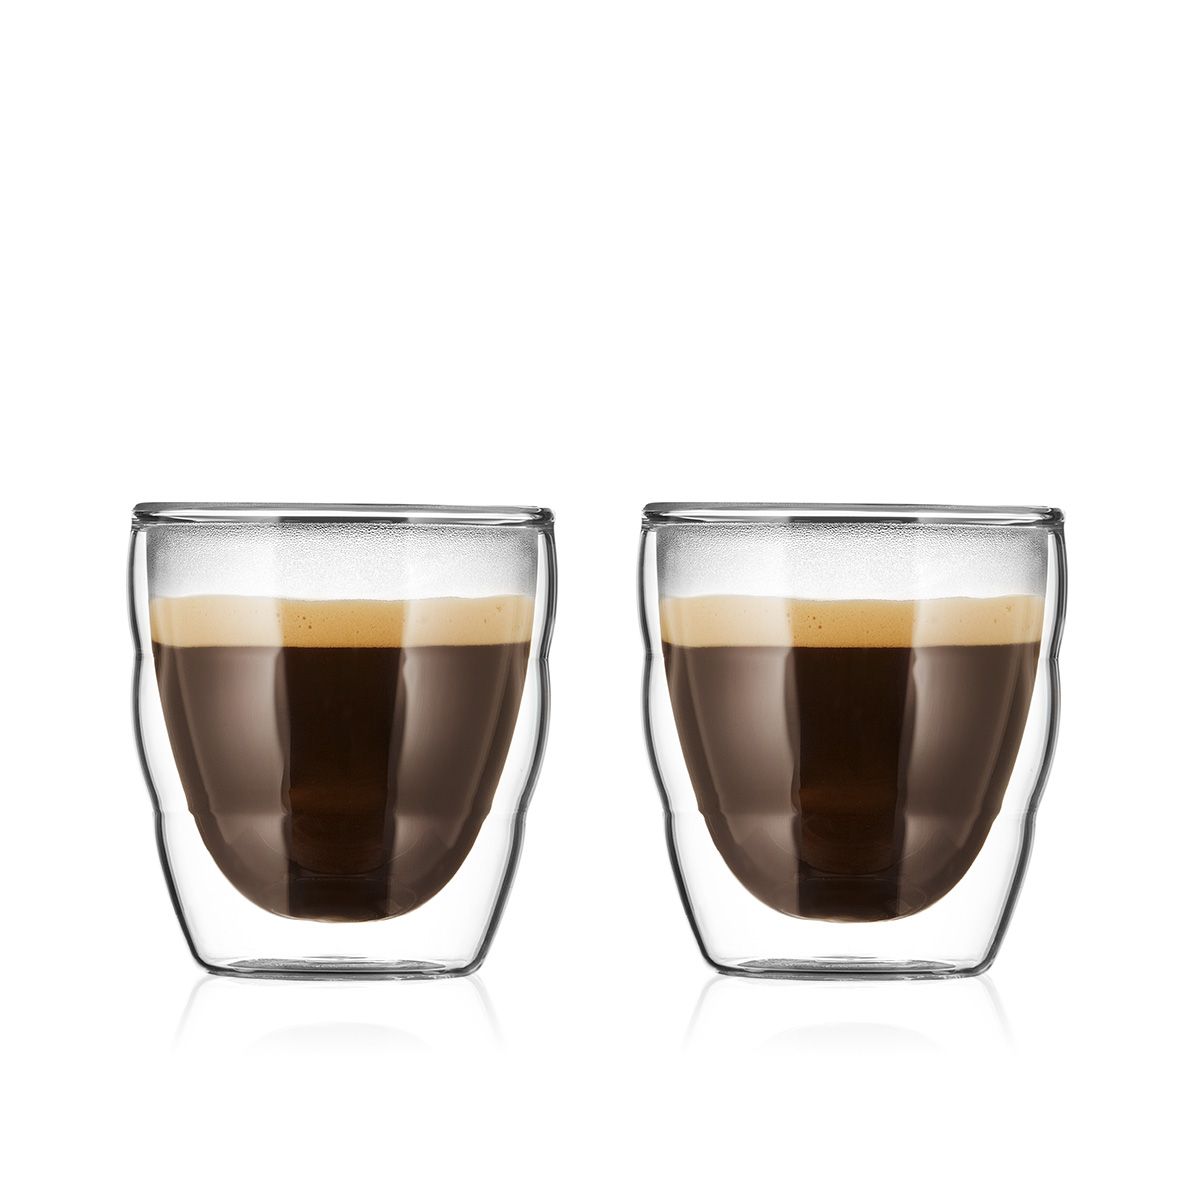 Bodum Pilatus espresso glas dubbel vägg, 2 st.